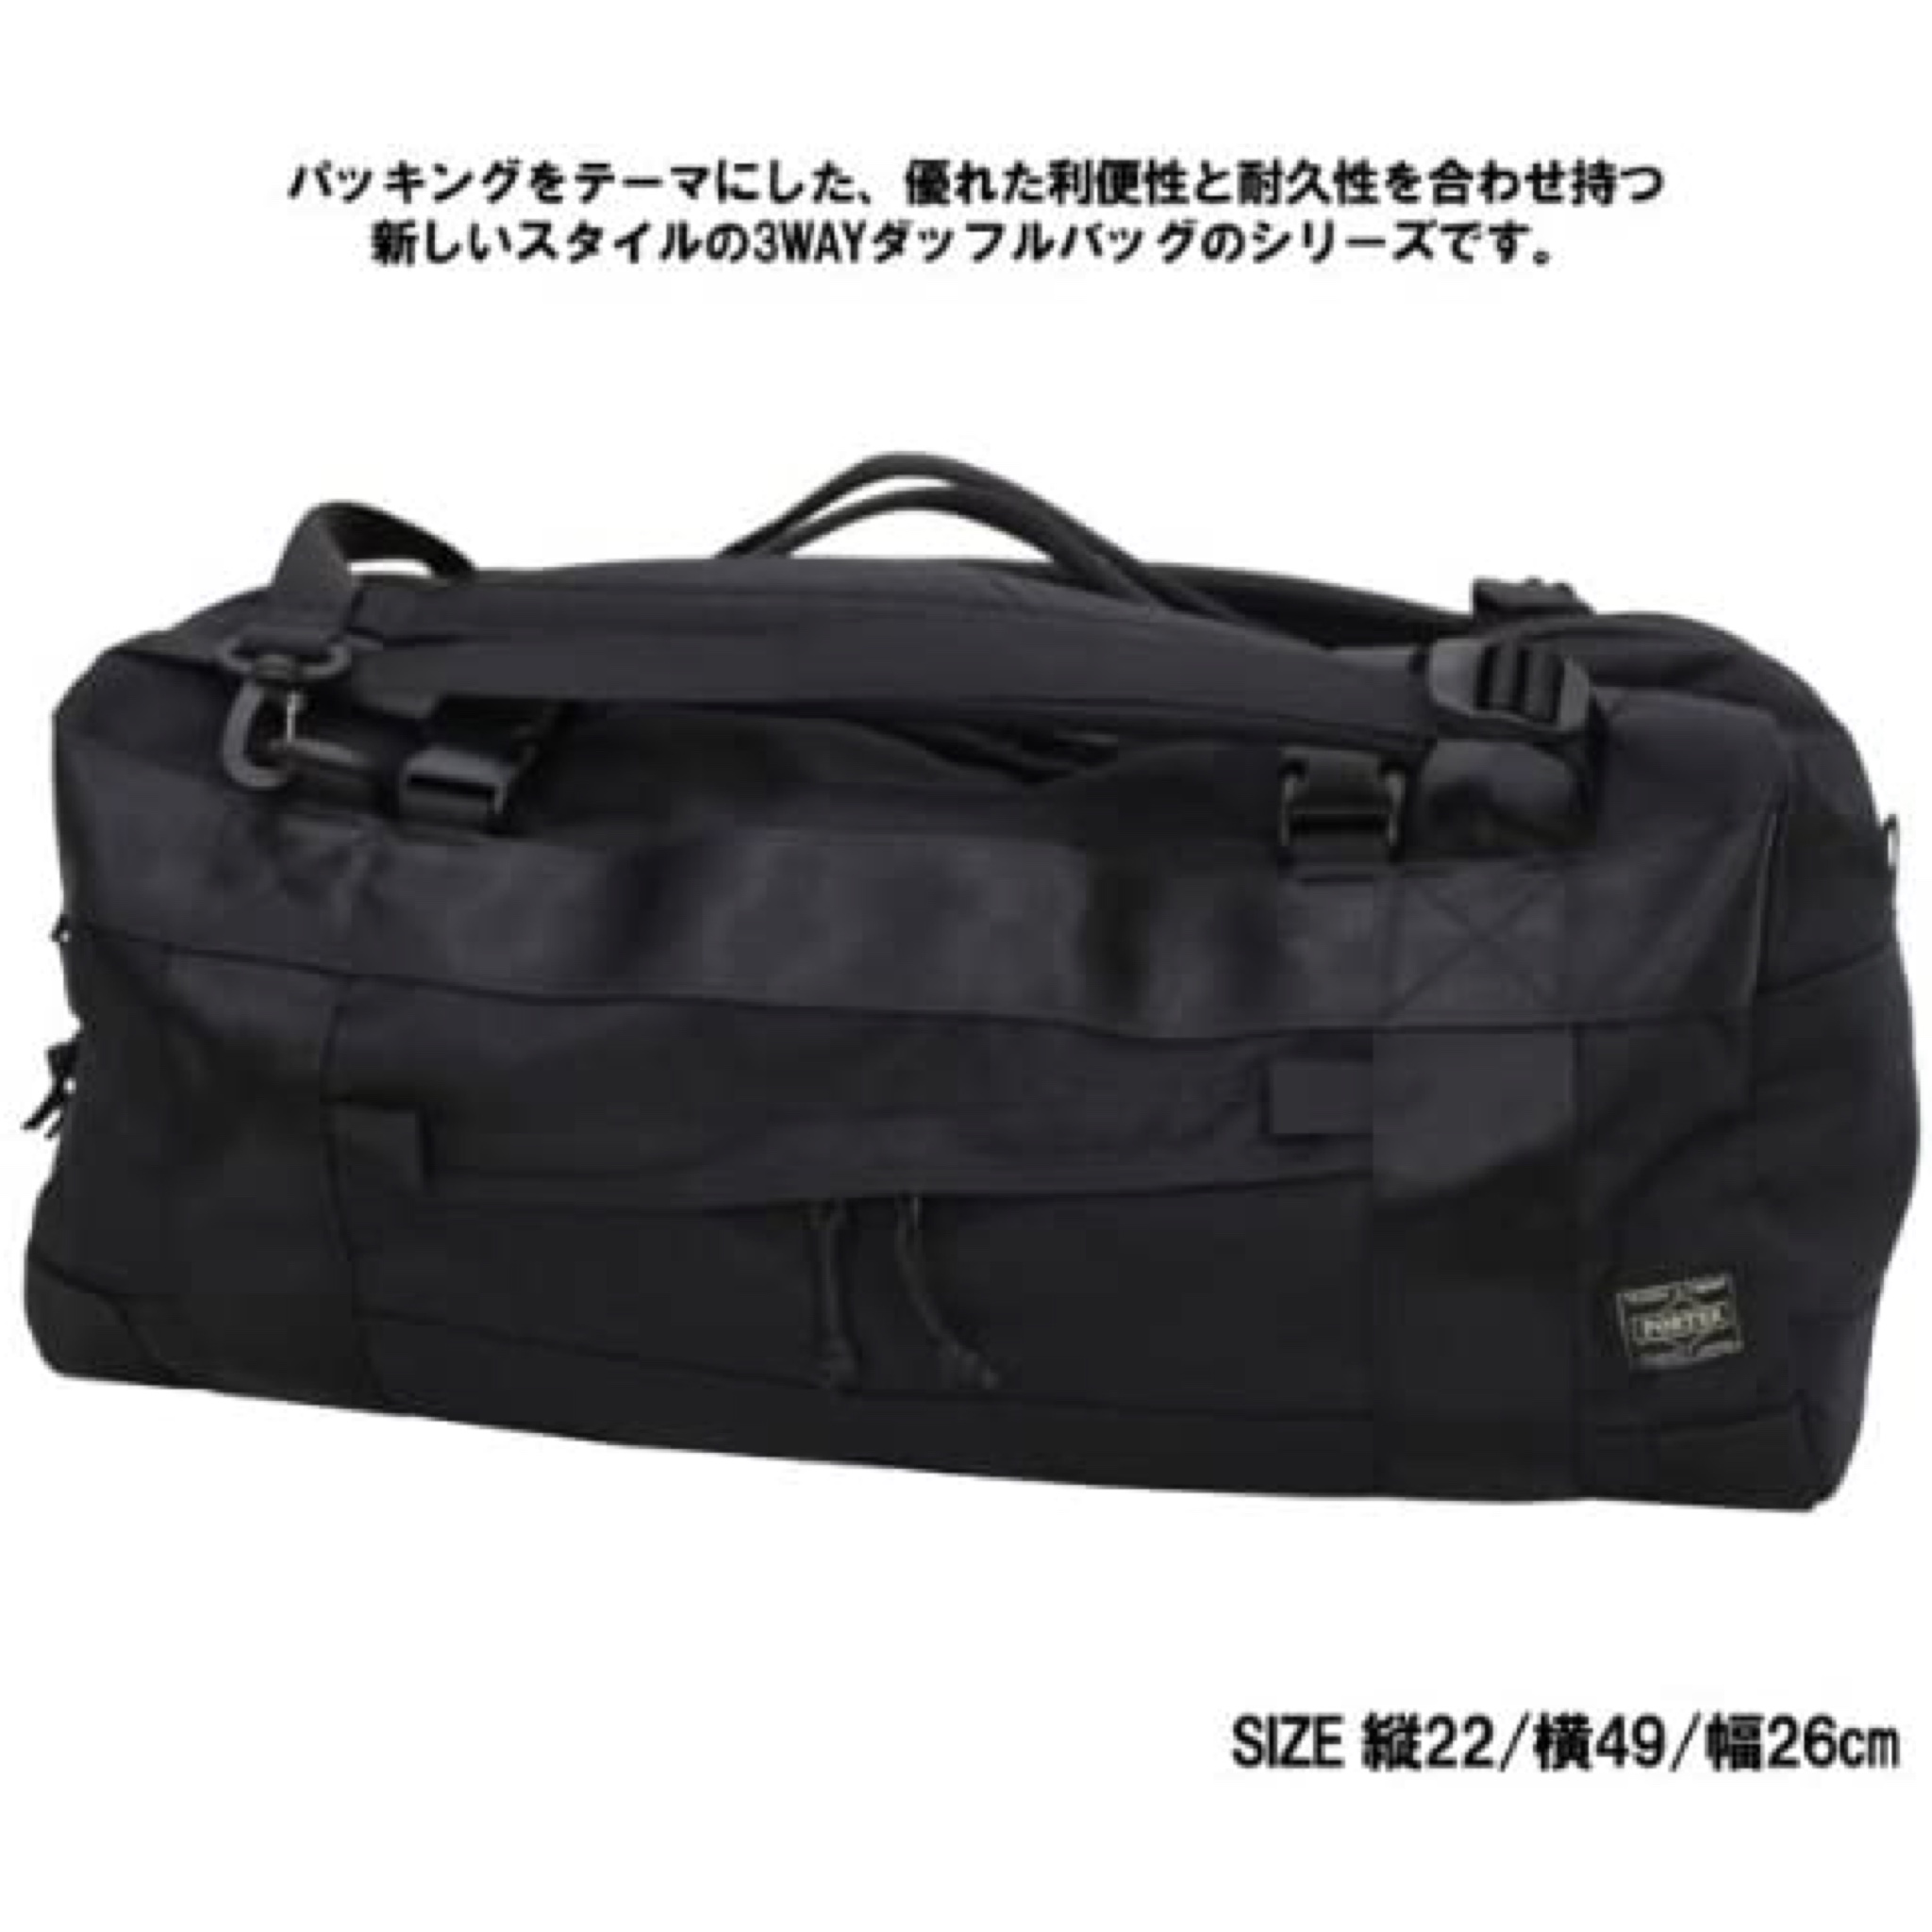 【運動族人】Porter Tokyo - PORTER 3-WAY Booth Pack 多用途行李 